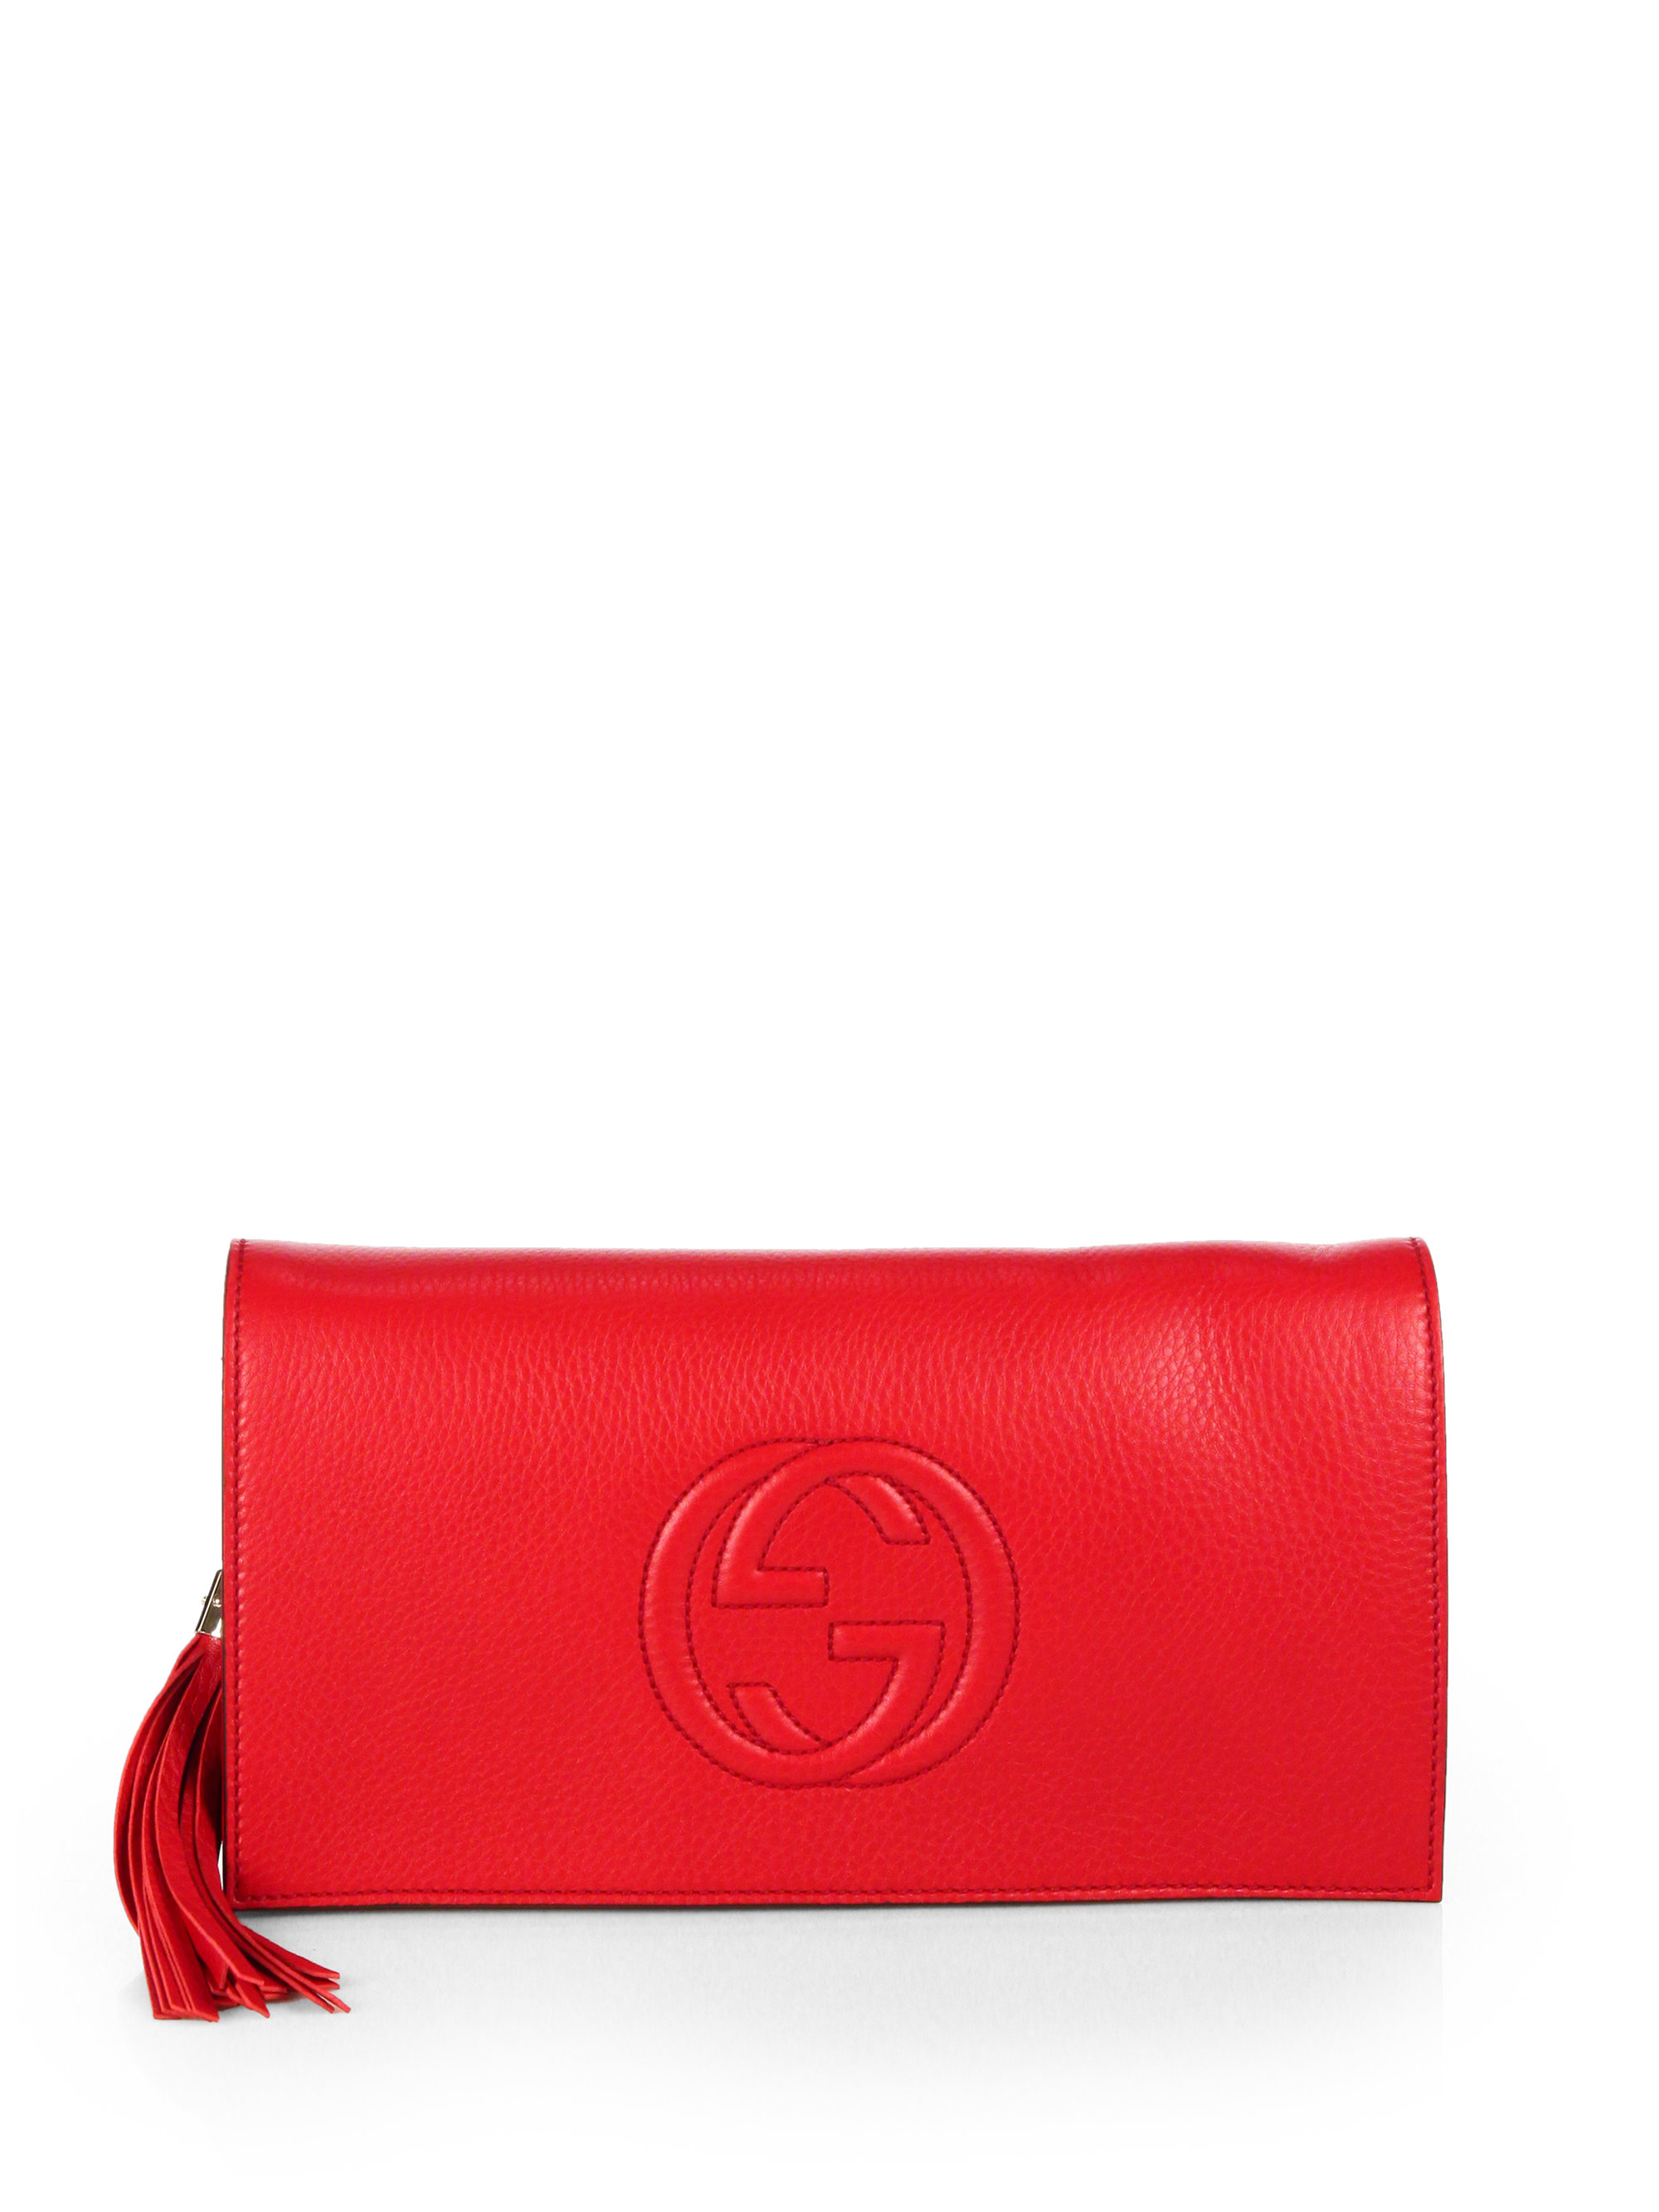 Lyst - Gucci Soho Clutch in Red